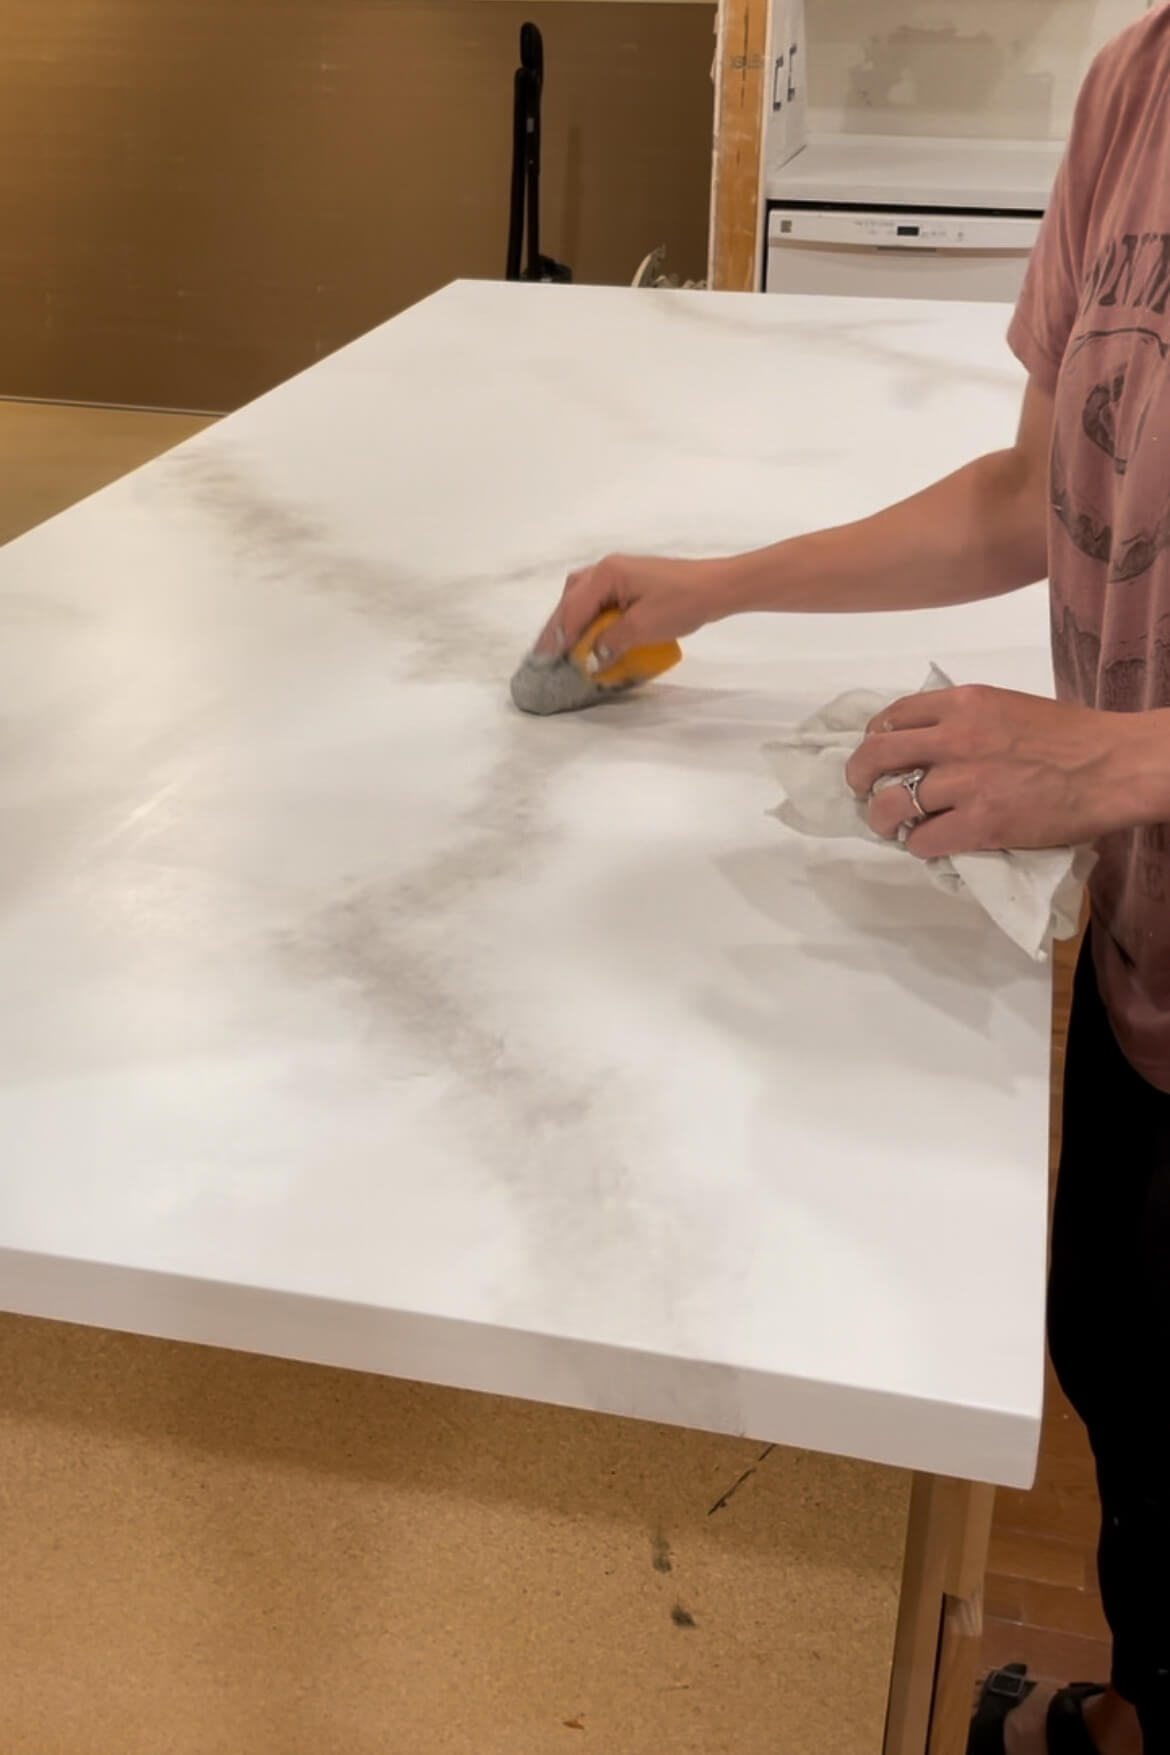 DIY faux marble countertop using epoxy.